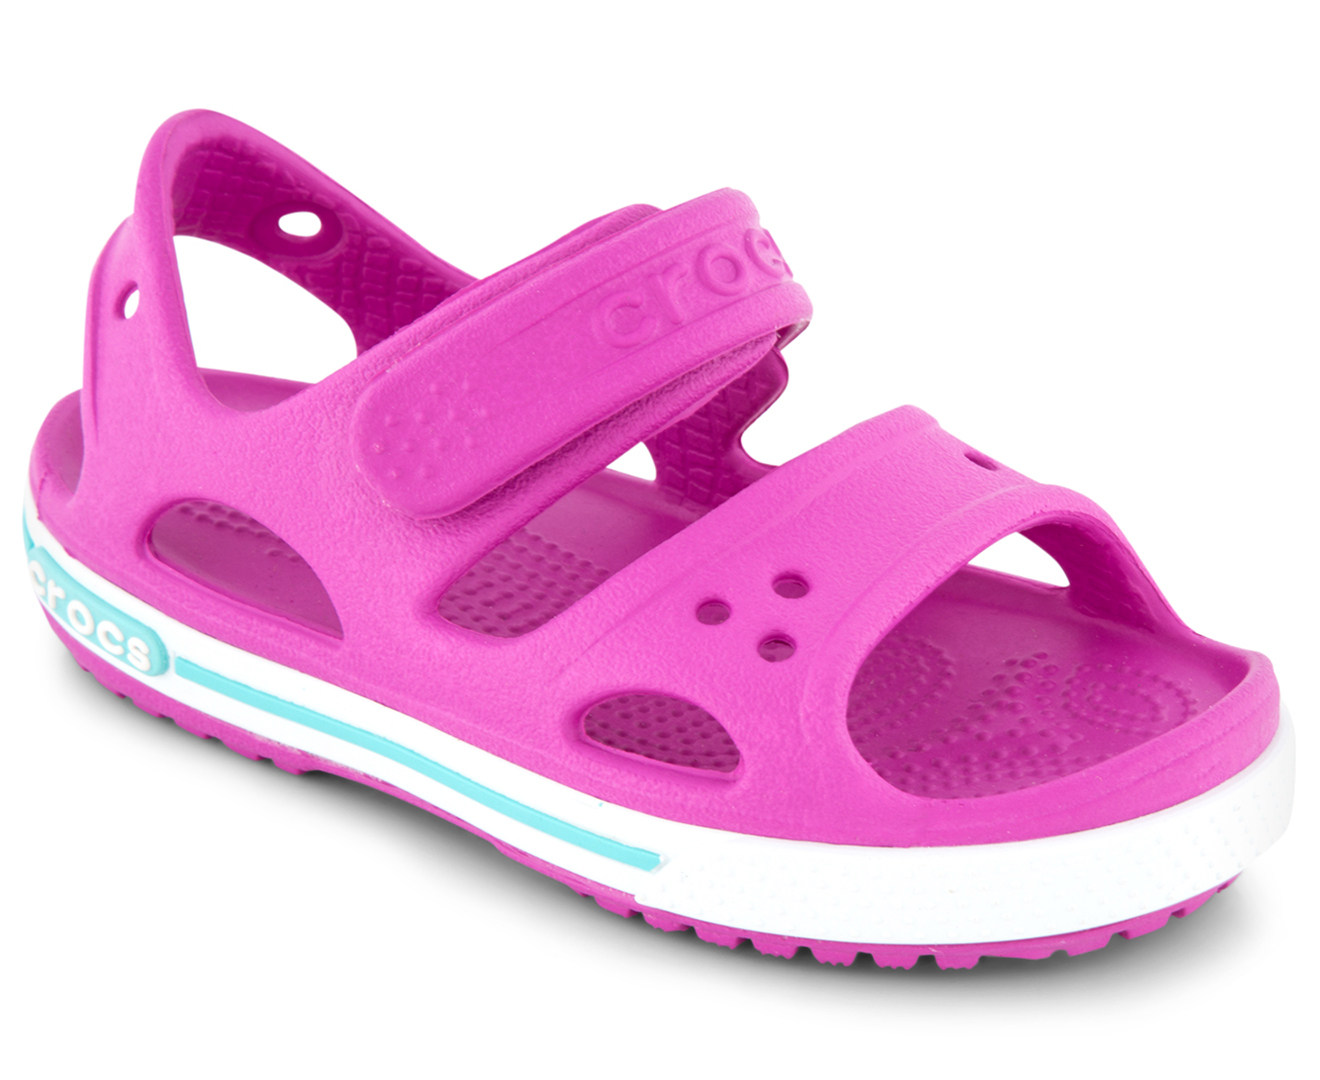 Crocs Kids' Crocband II Sandal - Vibrant Violet/White | eBay